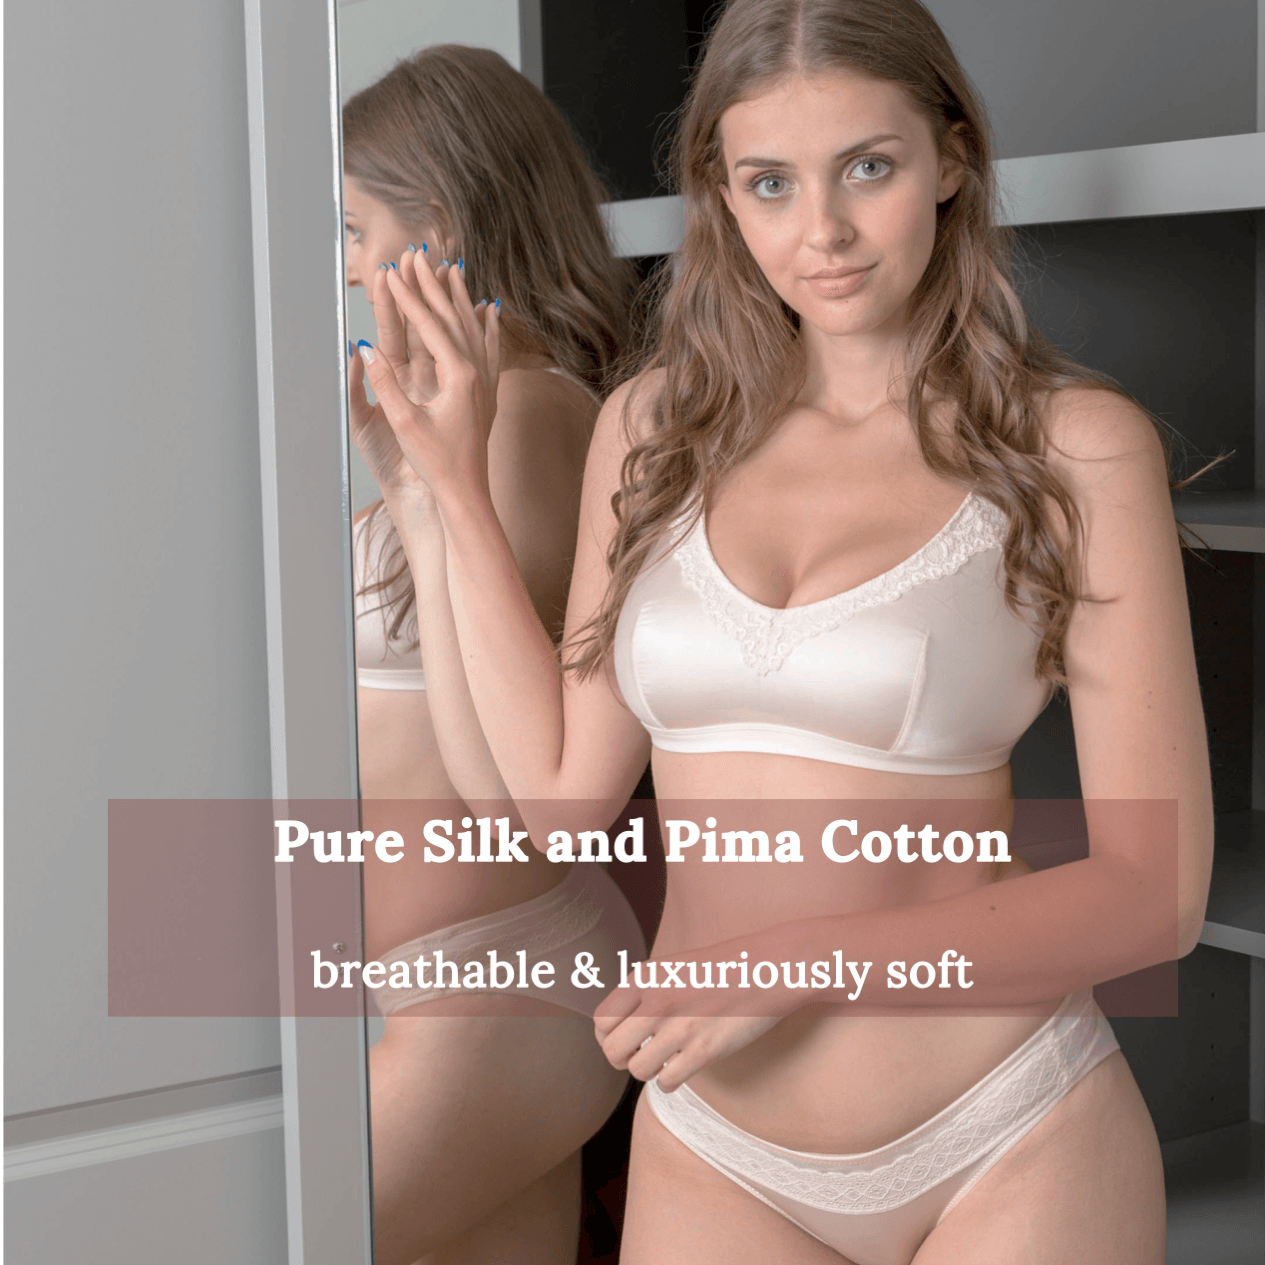 Organic Pima Cotton Bra Sets: 7 + 1 Reasons Why You Need These